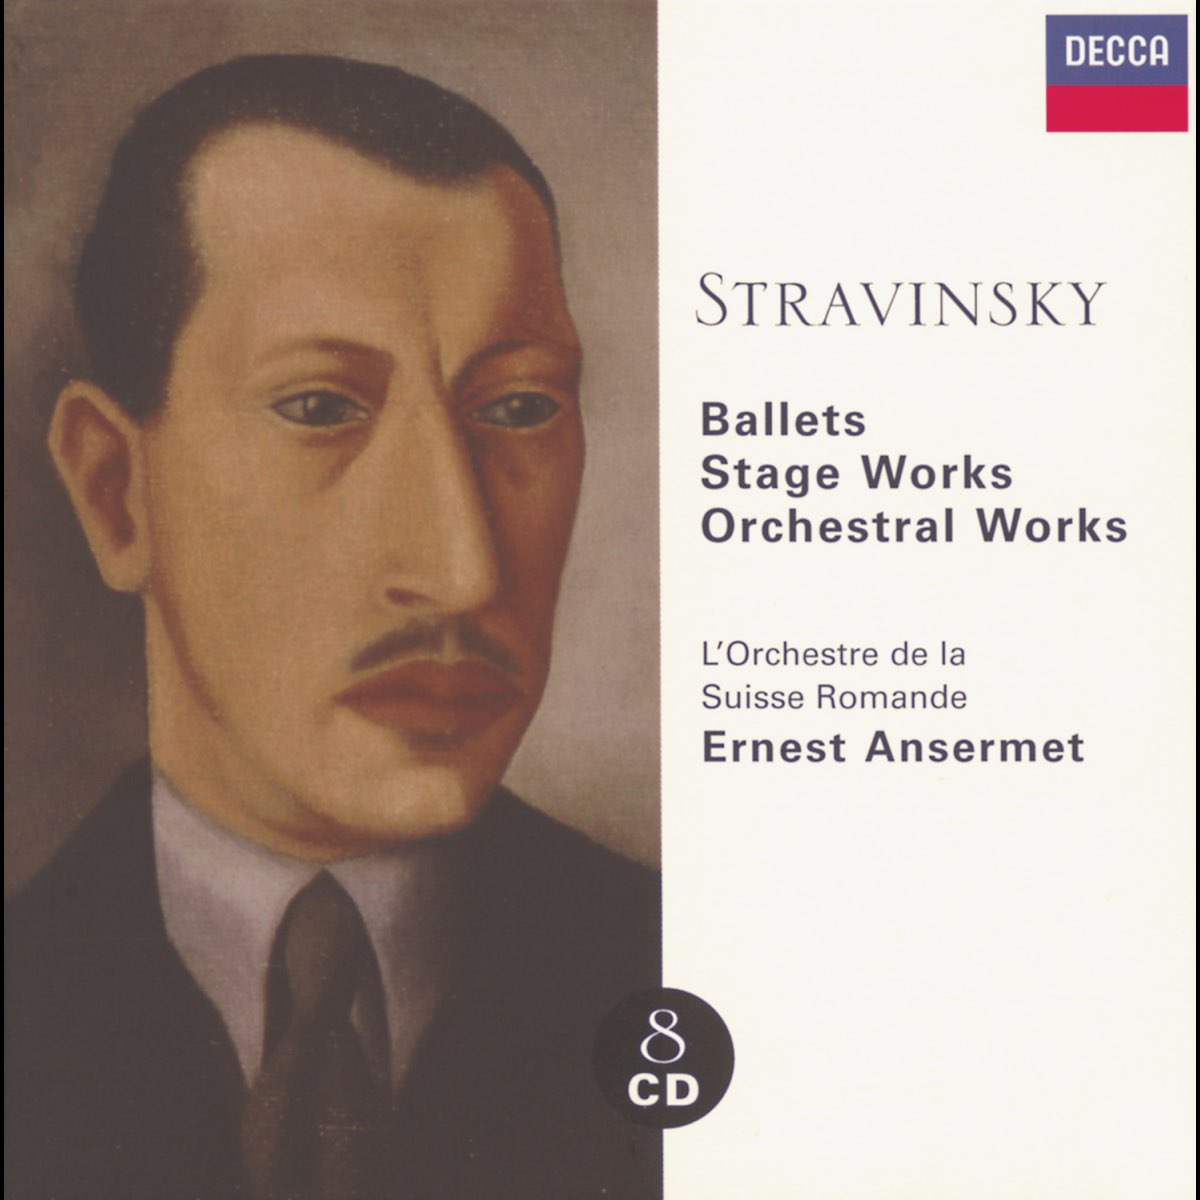 ‎stravinsky Ballets Stage Works Orchestral Works Album By Orchestre De La Suisse Romande 5510